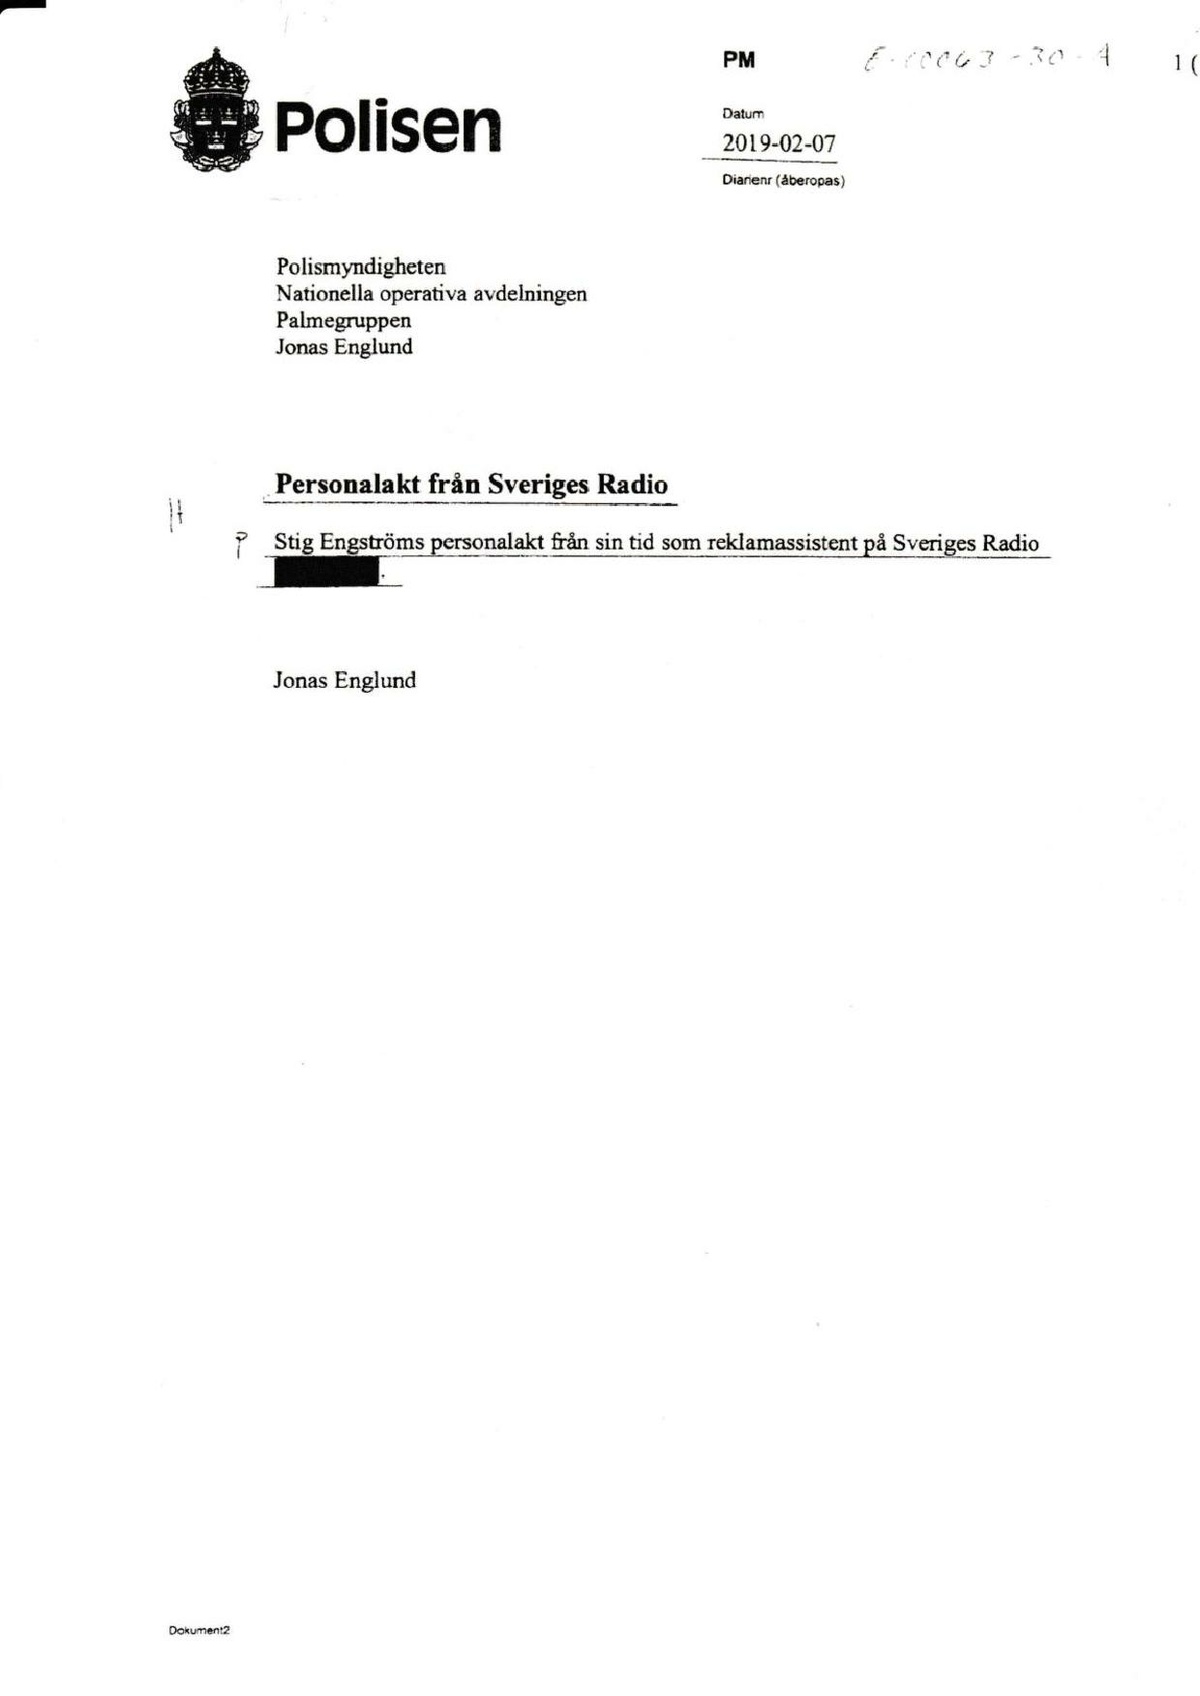 Pol-2019-02-05 E63-30 Rekvisition samt PM. Stig Engströms personalakt hos Sveriges radio. 30,30-A.pdf